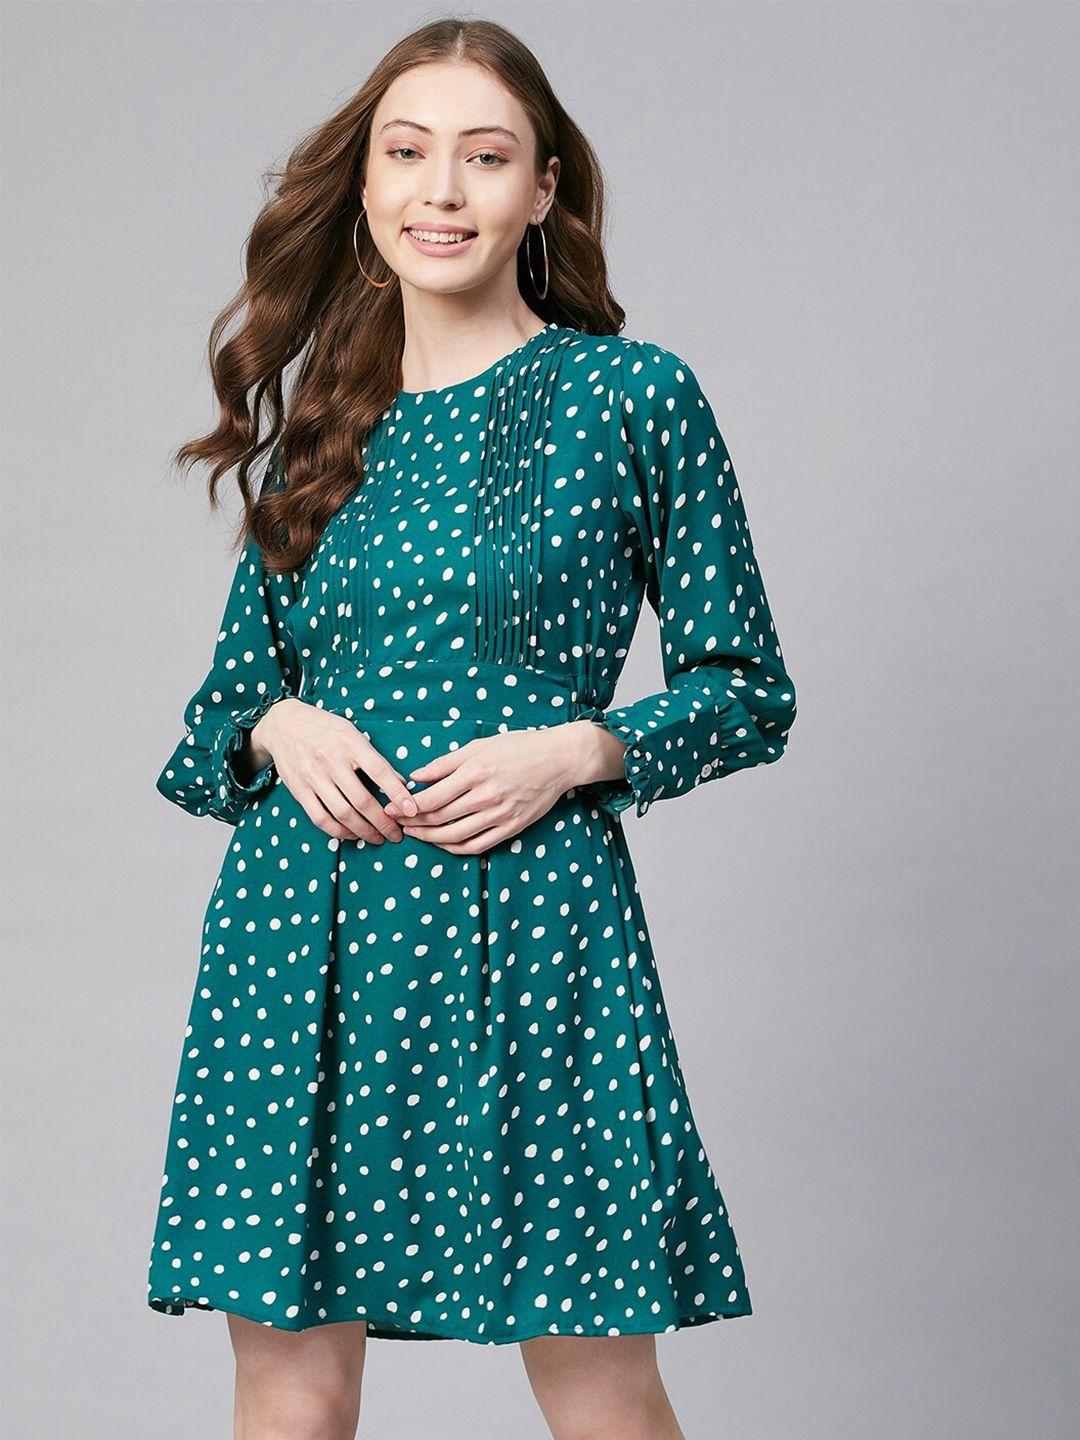 stylestone-green-polka-dots-dress